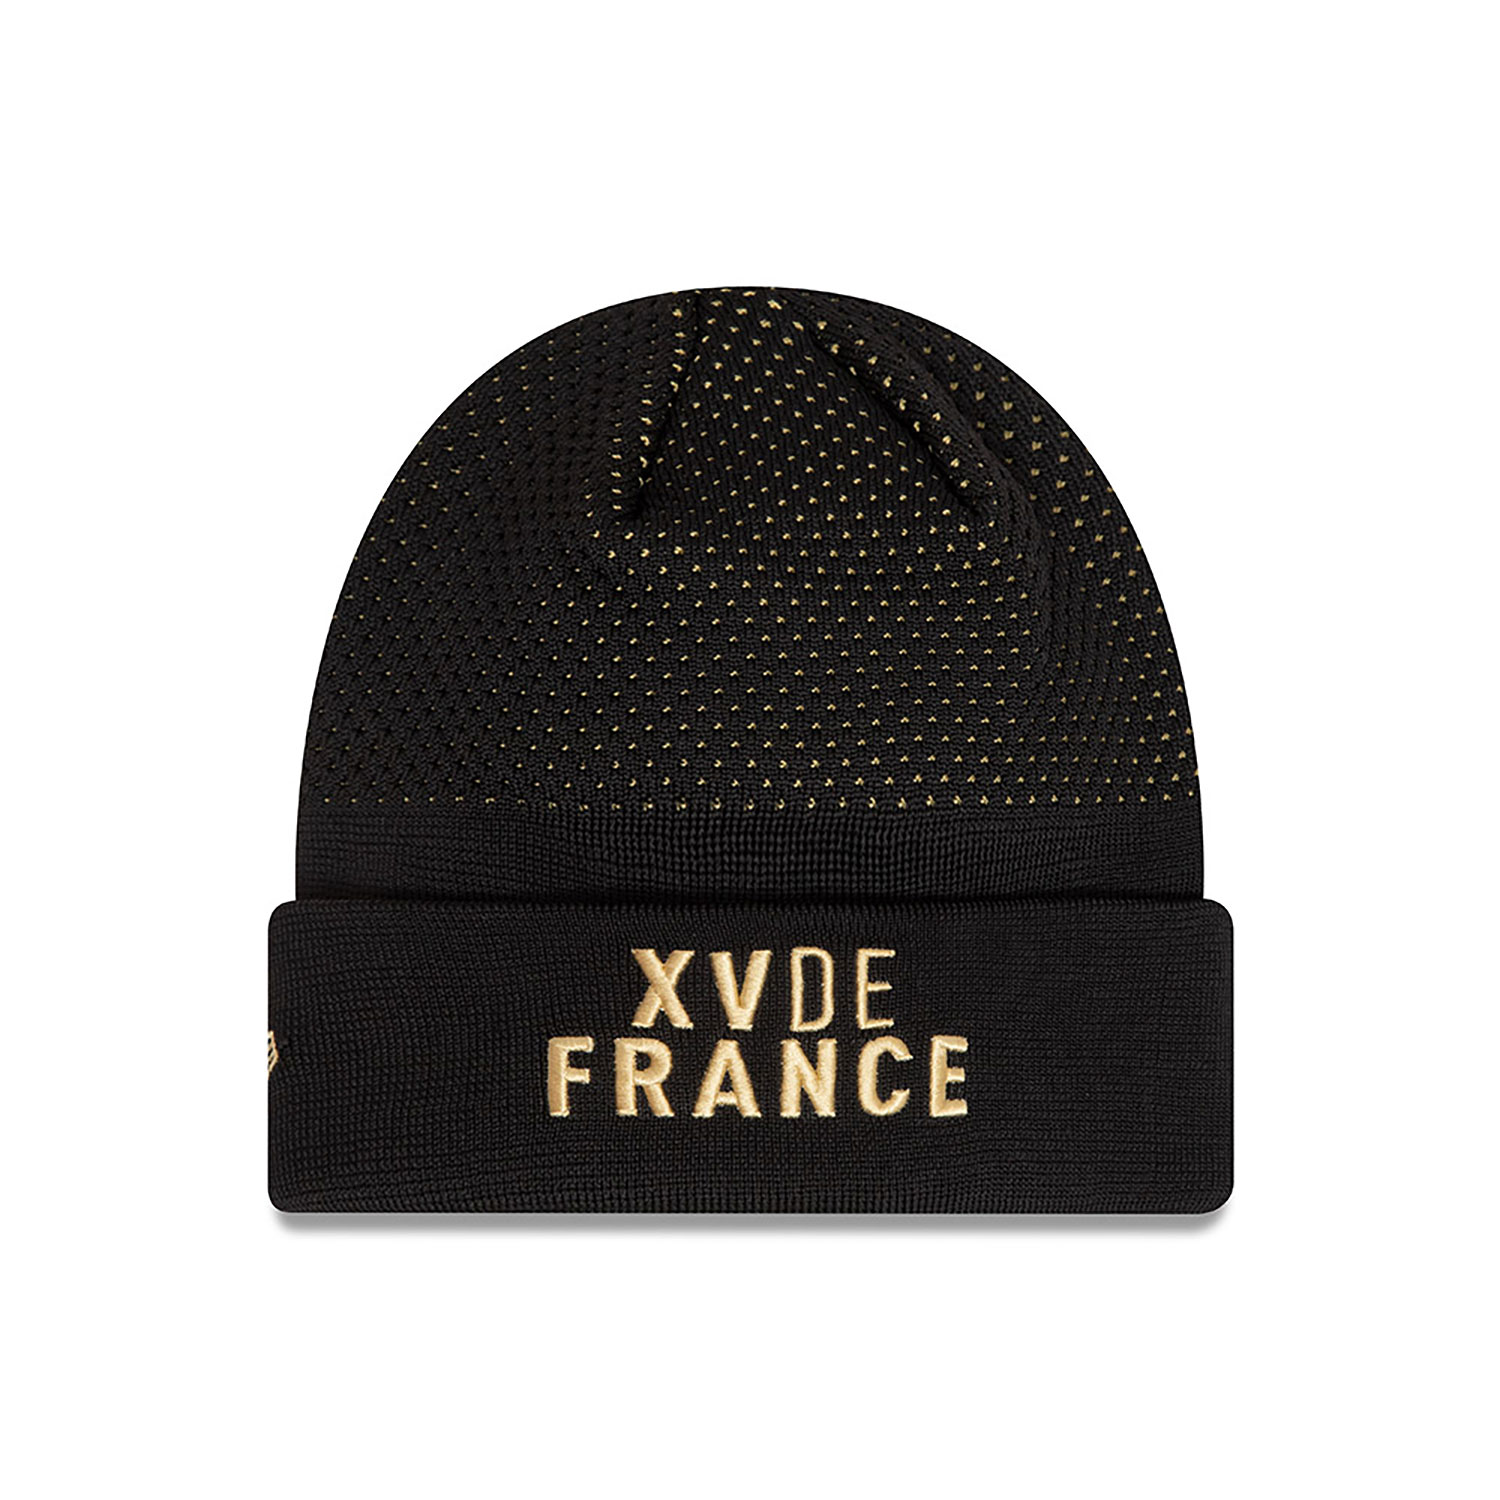 French Federation Of Rugby Wordmark Black Cuff Knit Beanie Hat